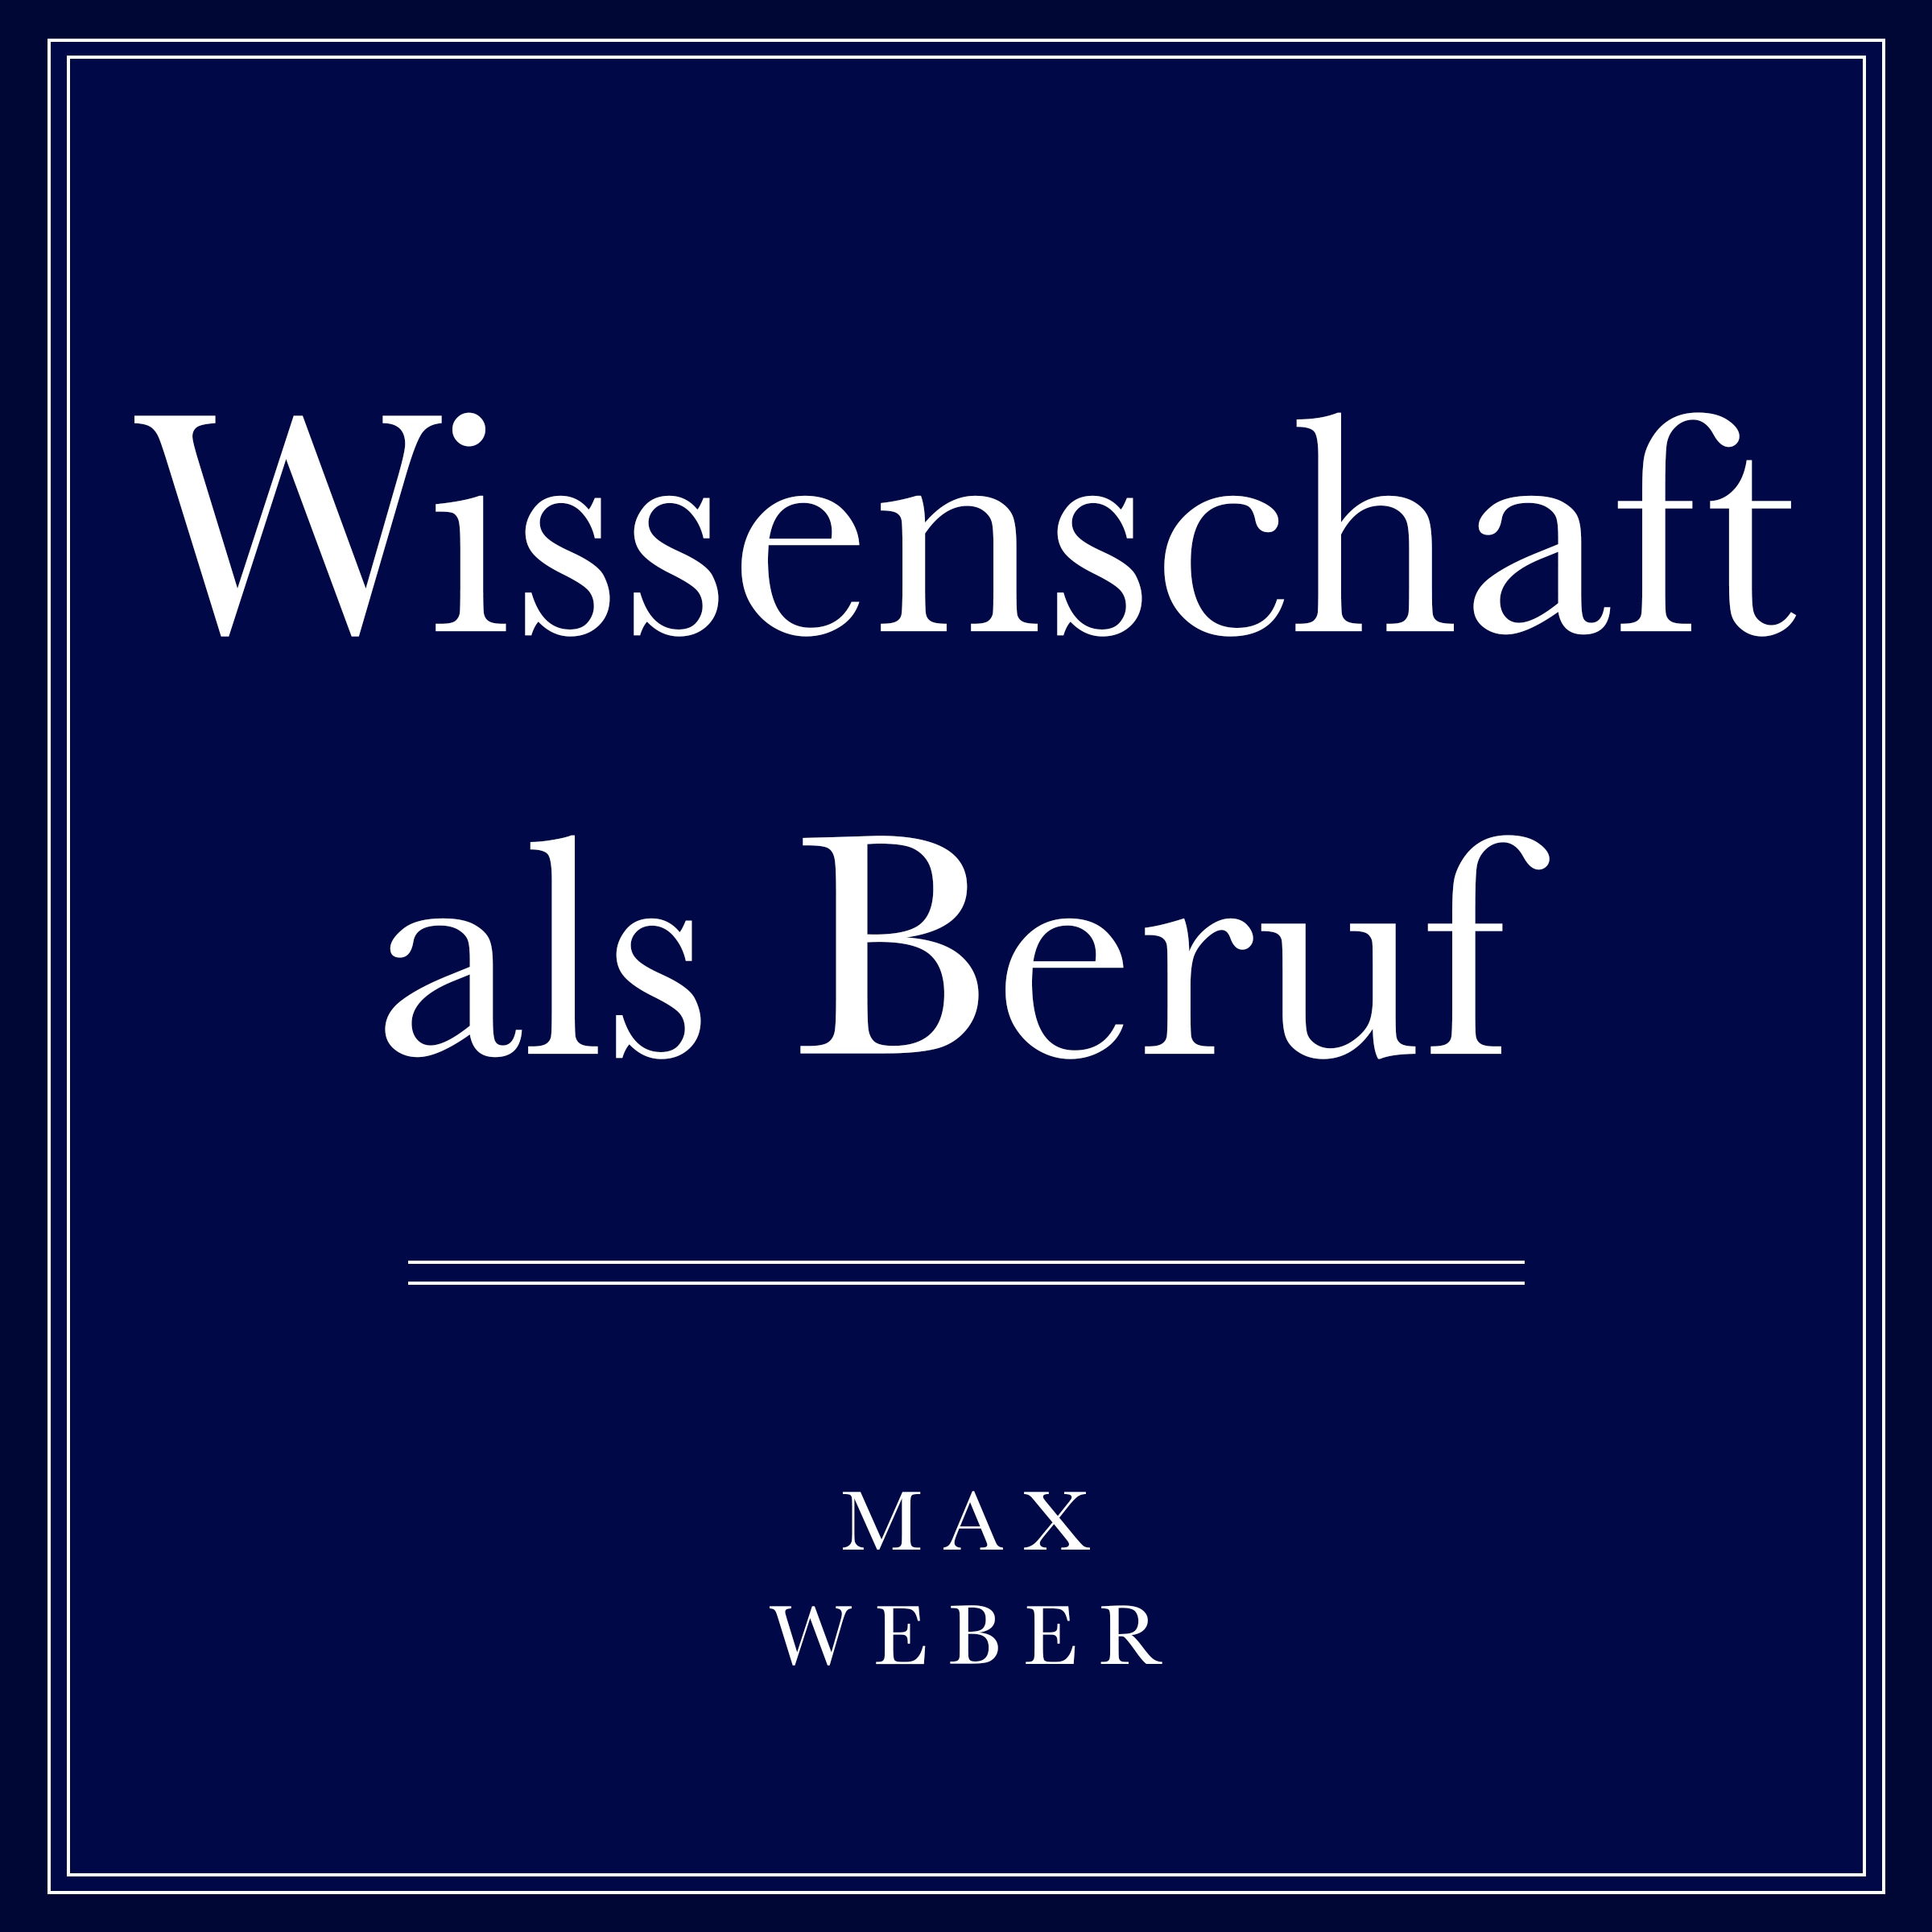 Wissenschaft als Beruf by Max Weber Audiobook